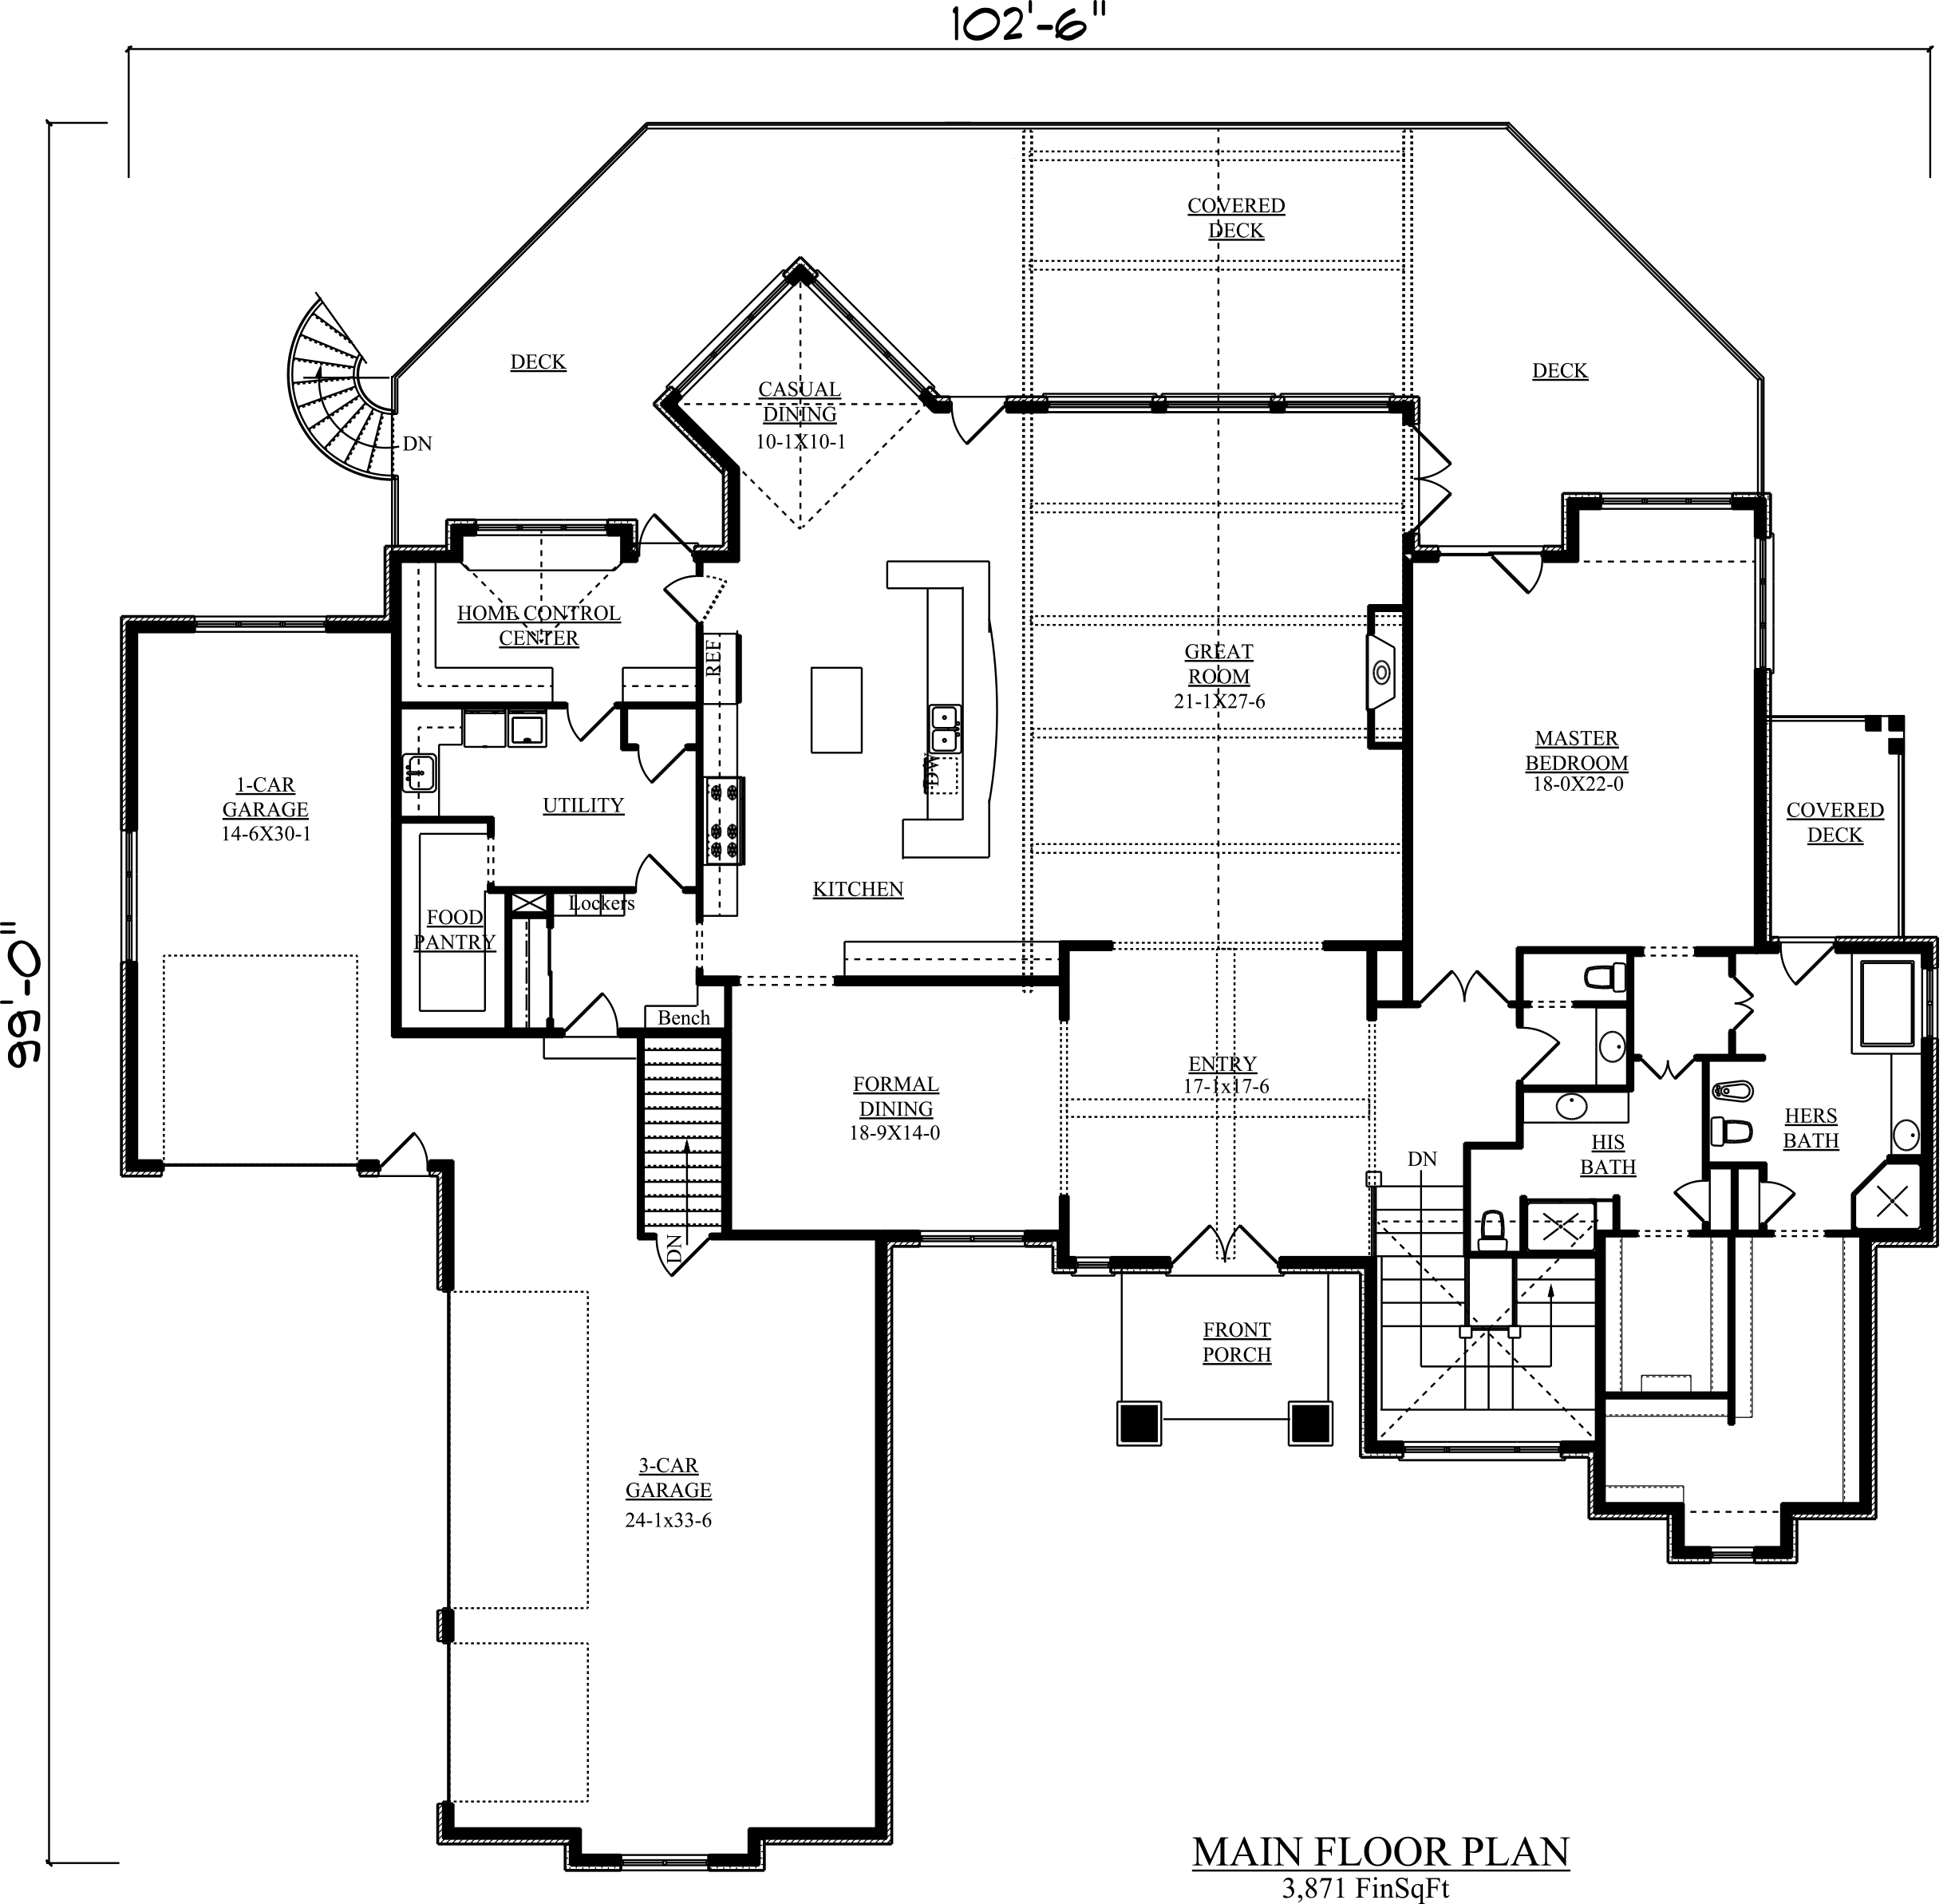 p1-the-champery-main-floor-r-c